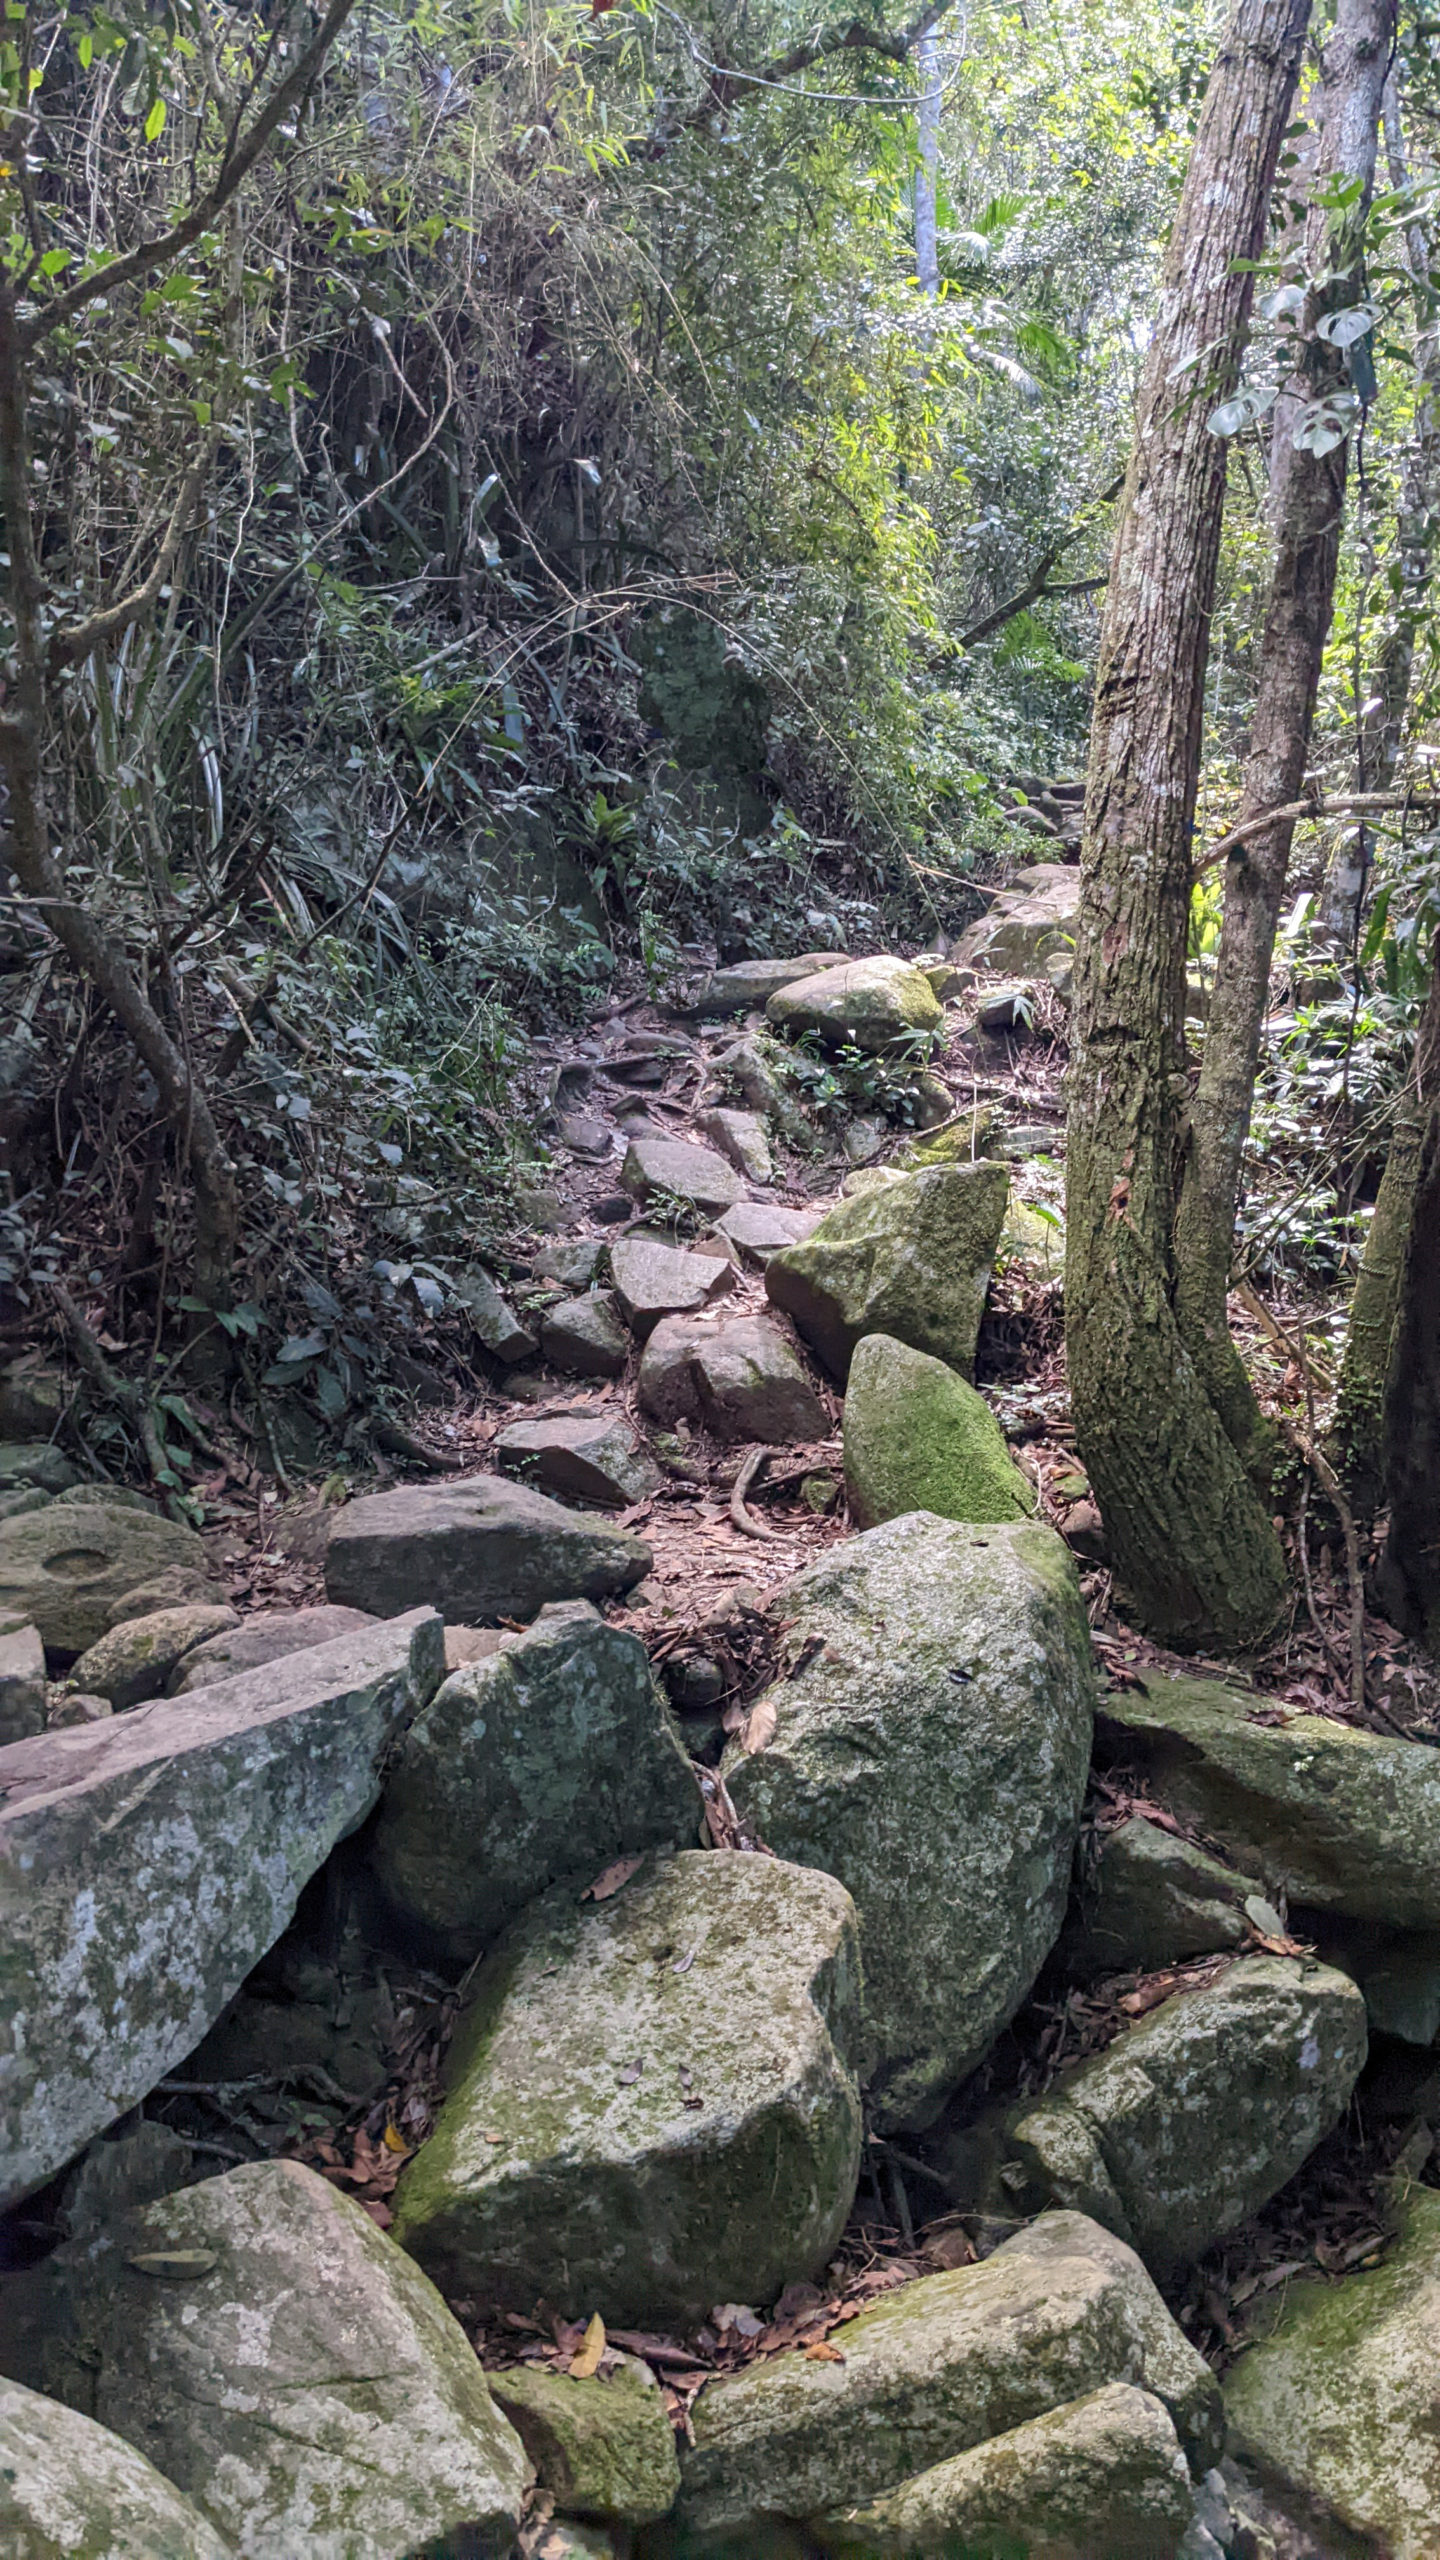 The steep rocks on the hike